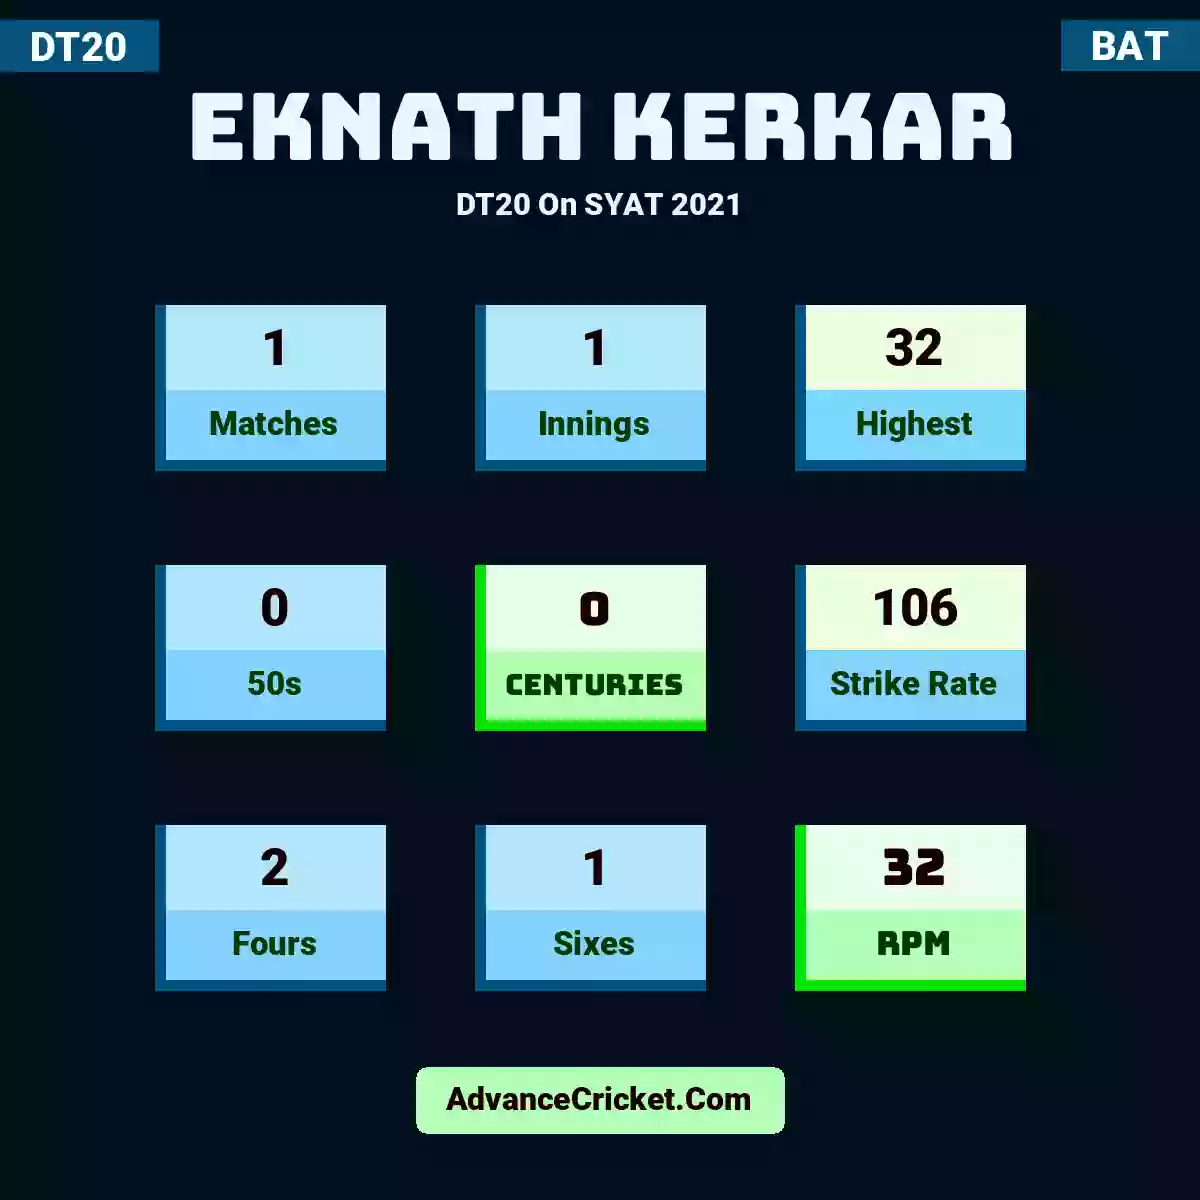 Eknath Kerkar DT20  On SYAT 2021, Eknath Kerkar played 1 matches, scored 32 runs as highest, 0 half-centuries, and 0 centuries, with a strike rate of 106. E.Kerkar hit 2 fours and 1 sixes, with an RPM of 32.